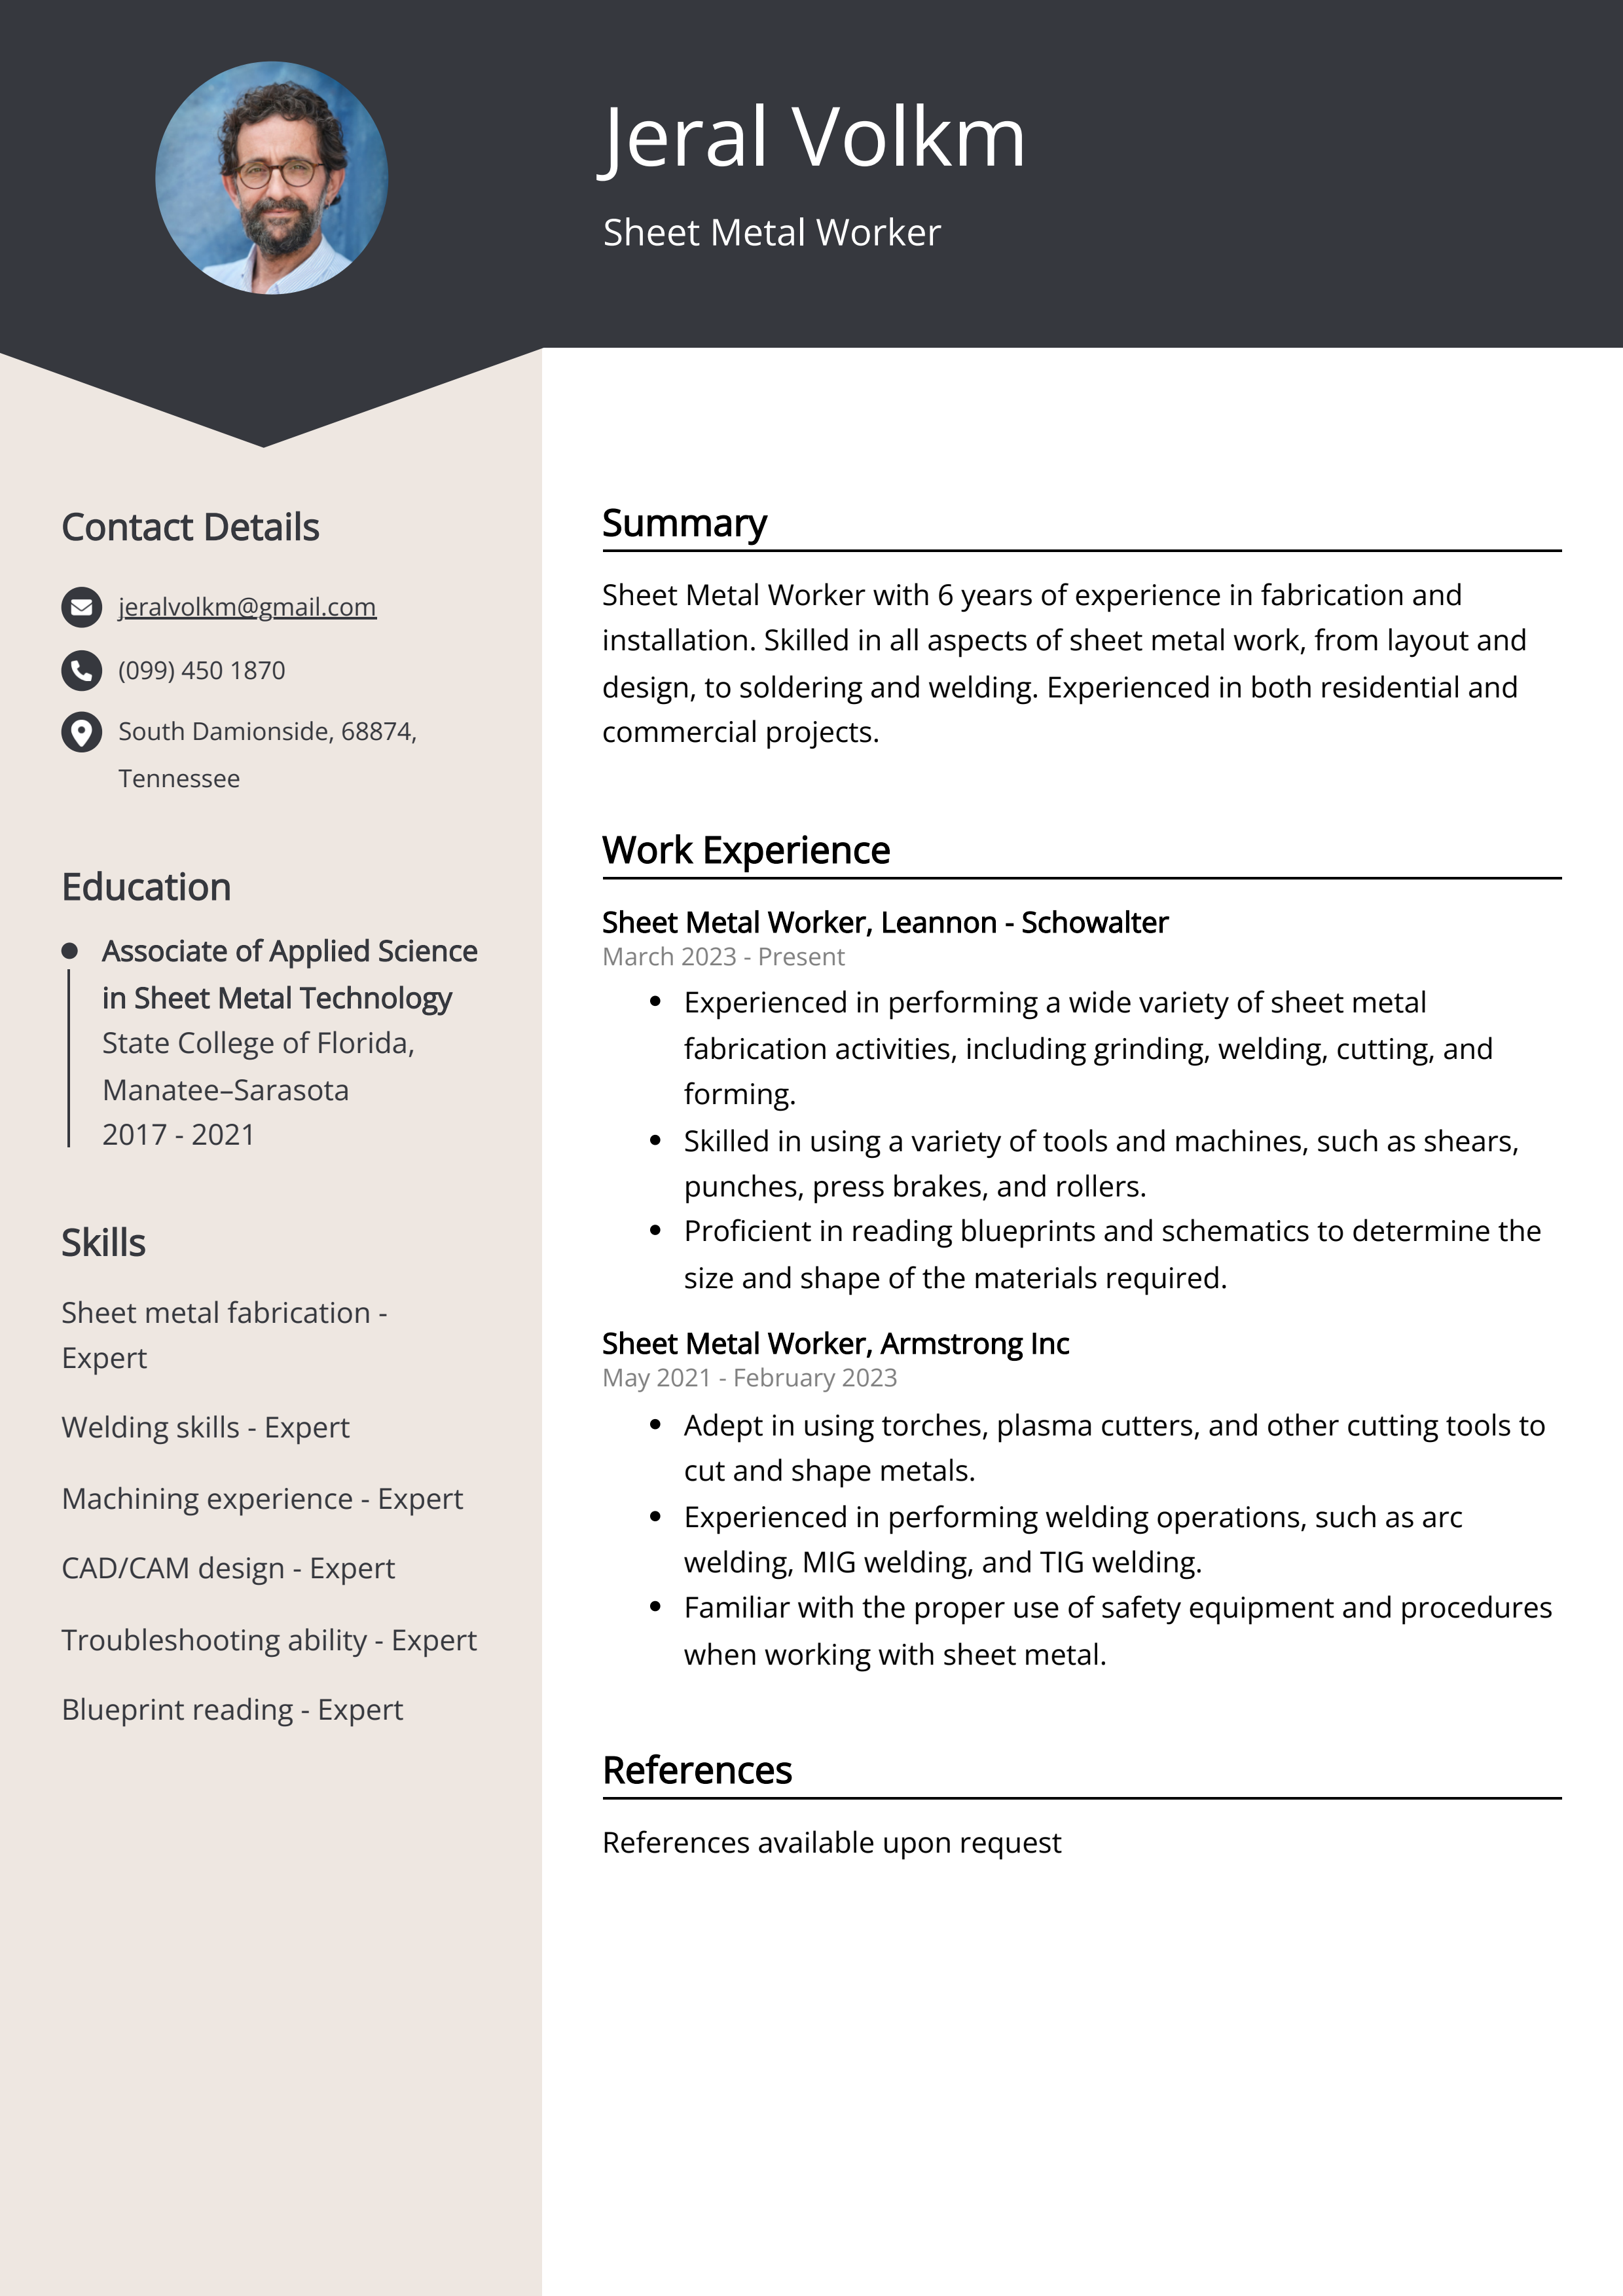 Sheet Metal Worker CV Example